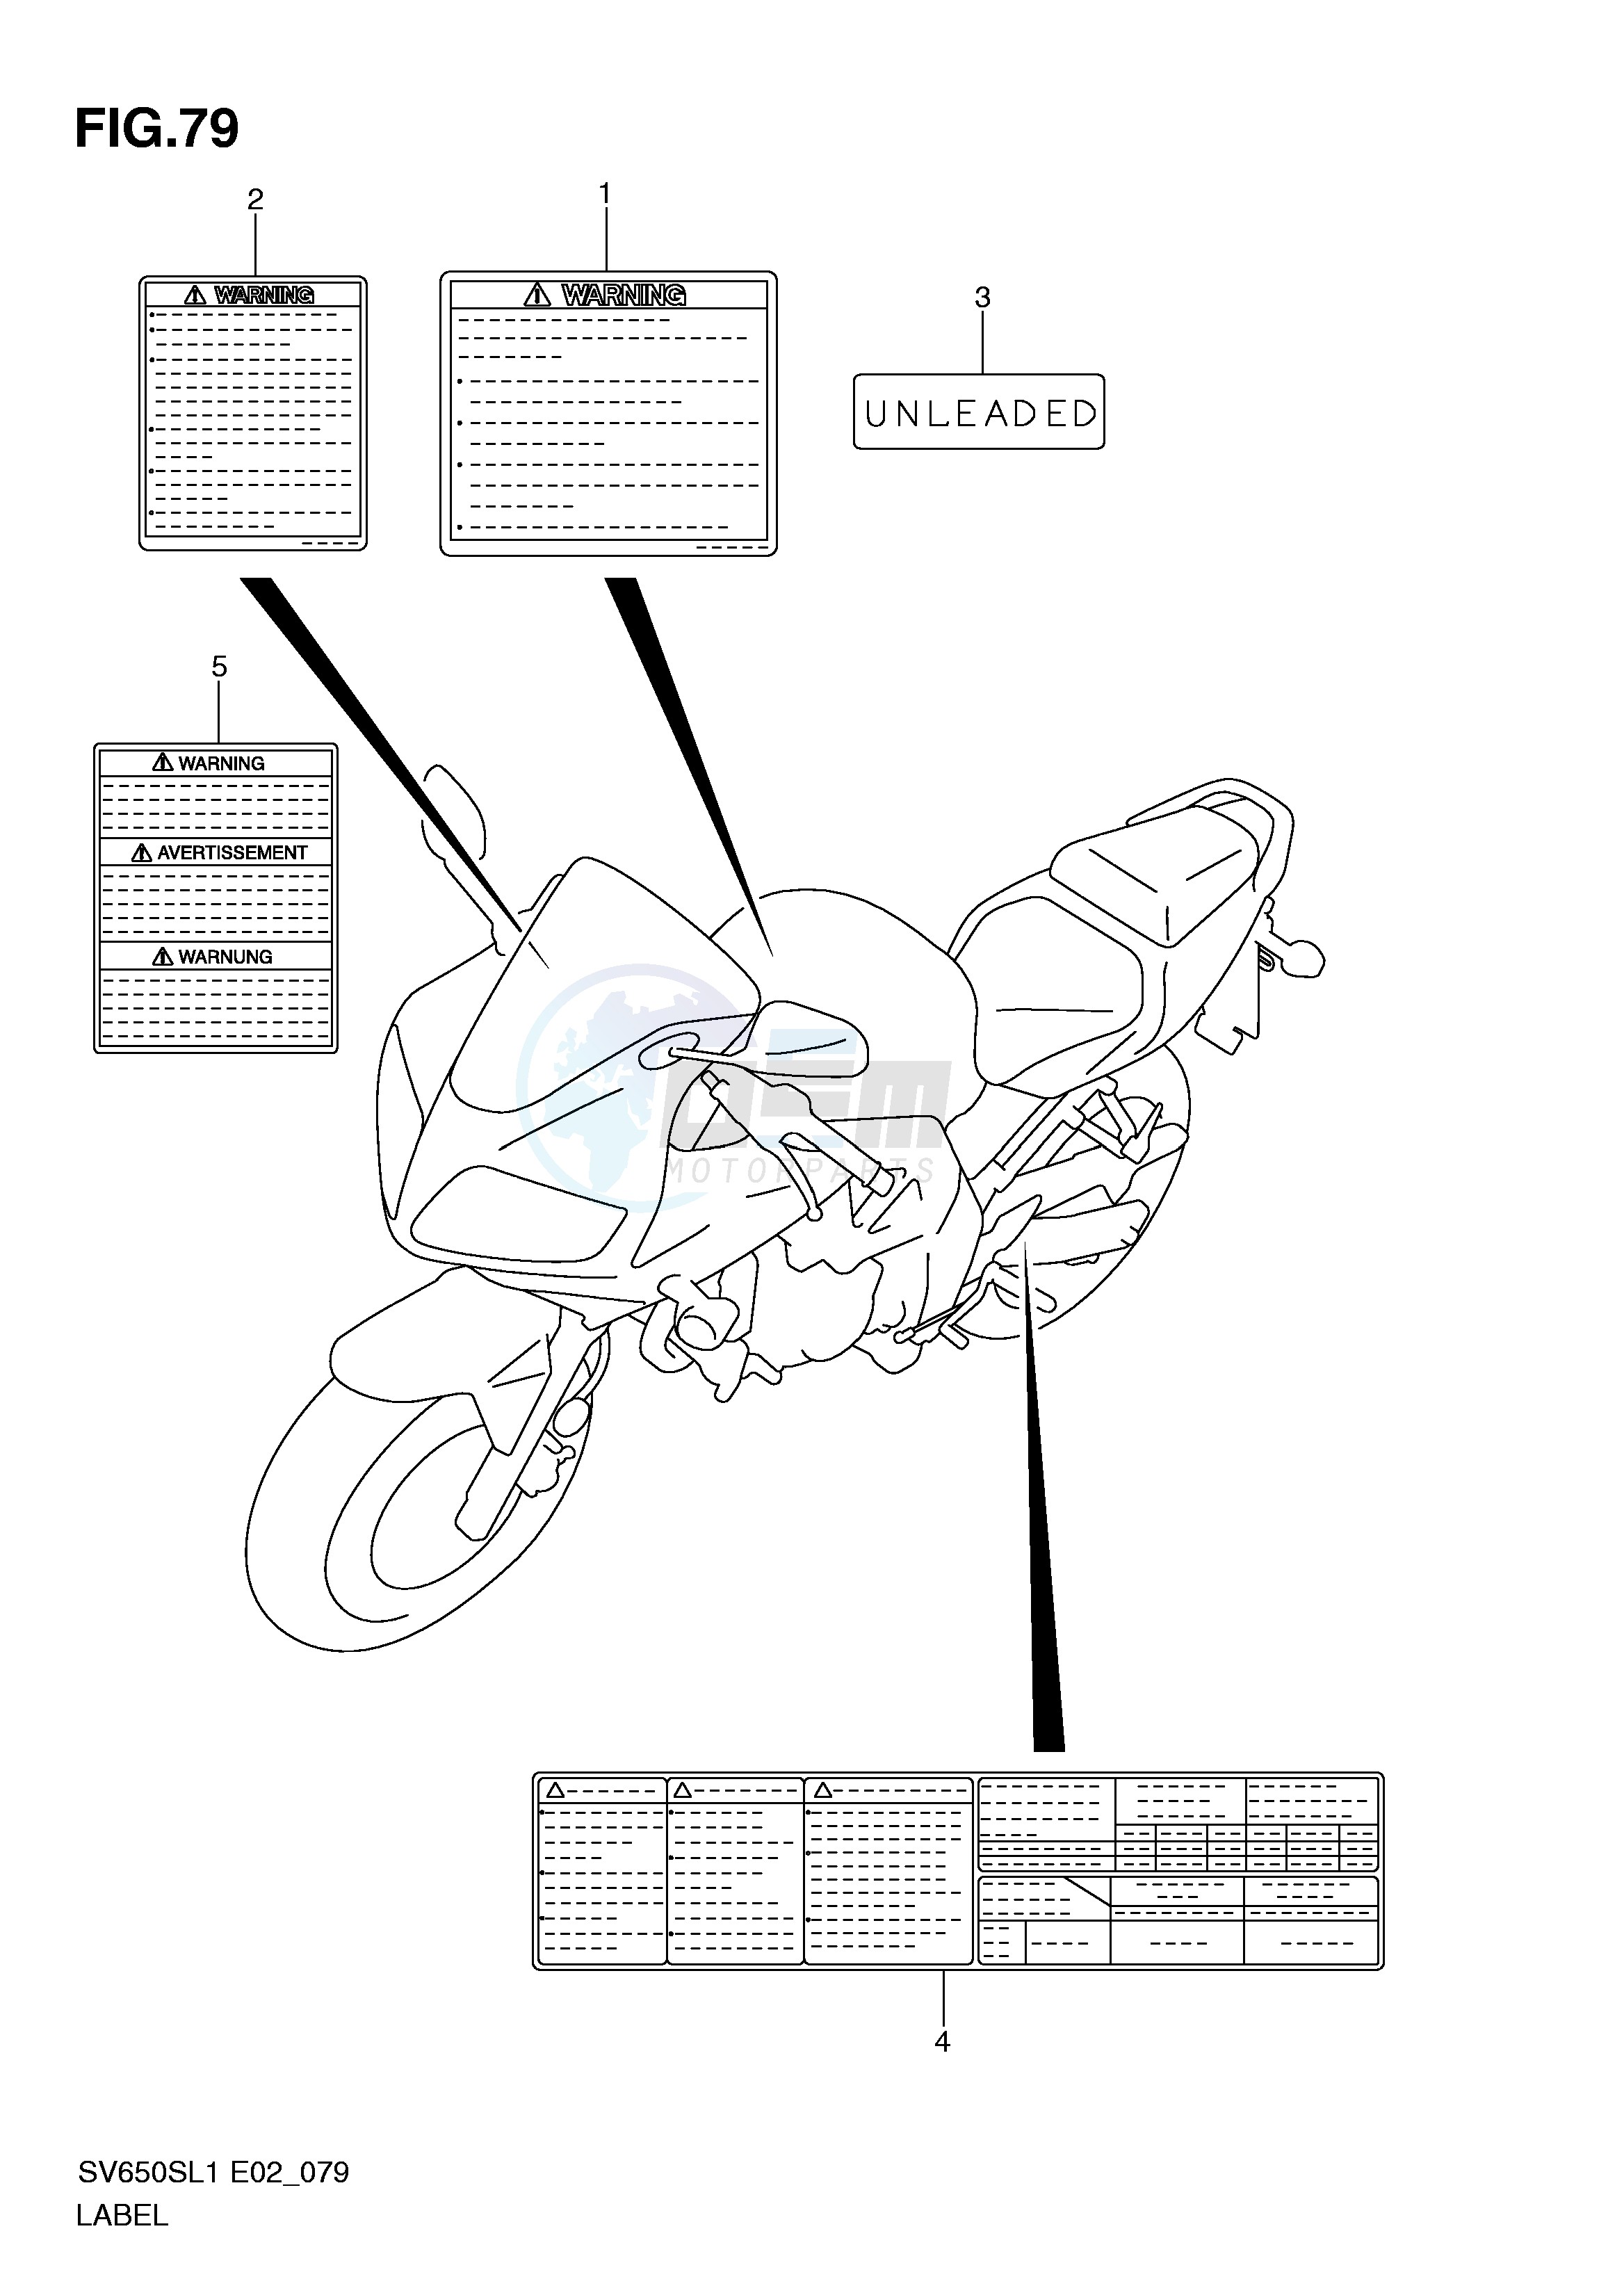 LABEL (SV650SUL1 E24) blueprint